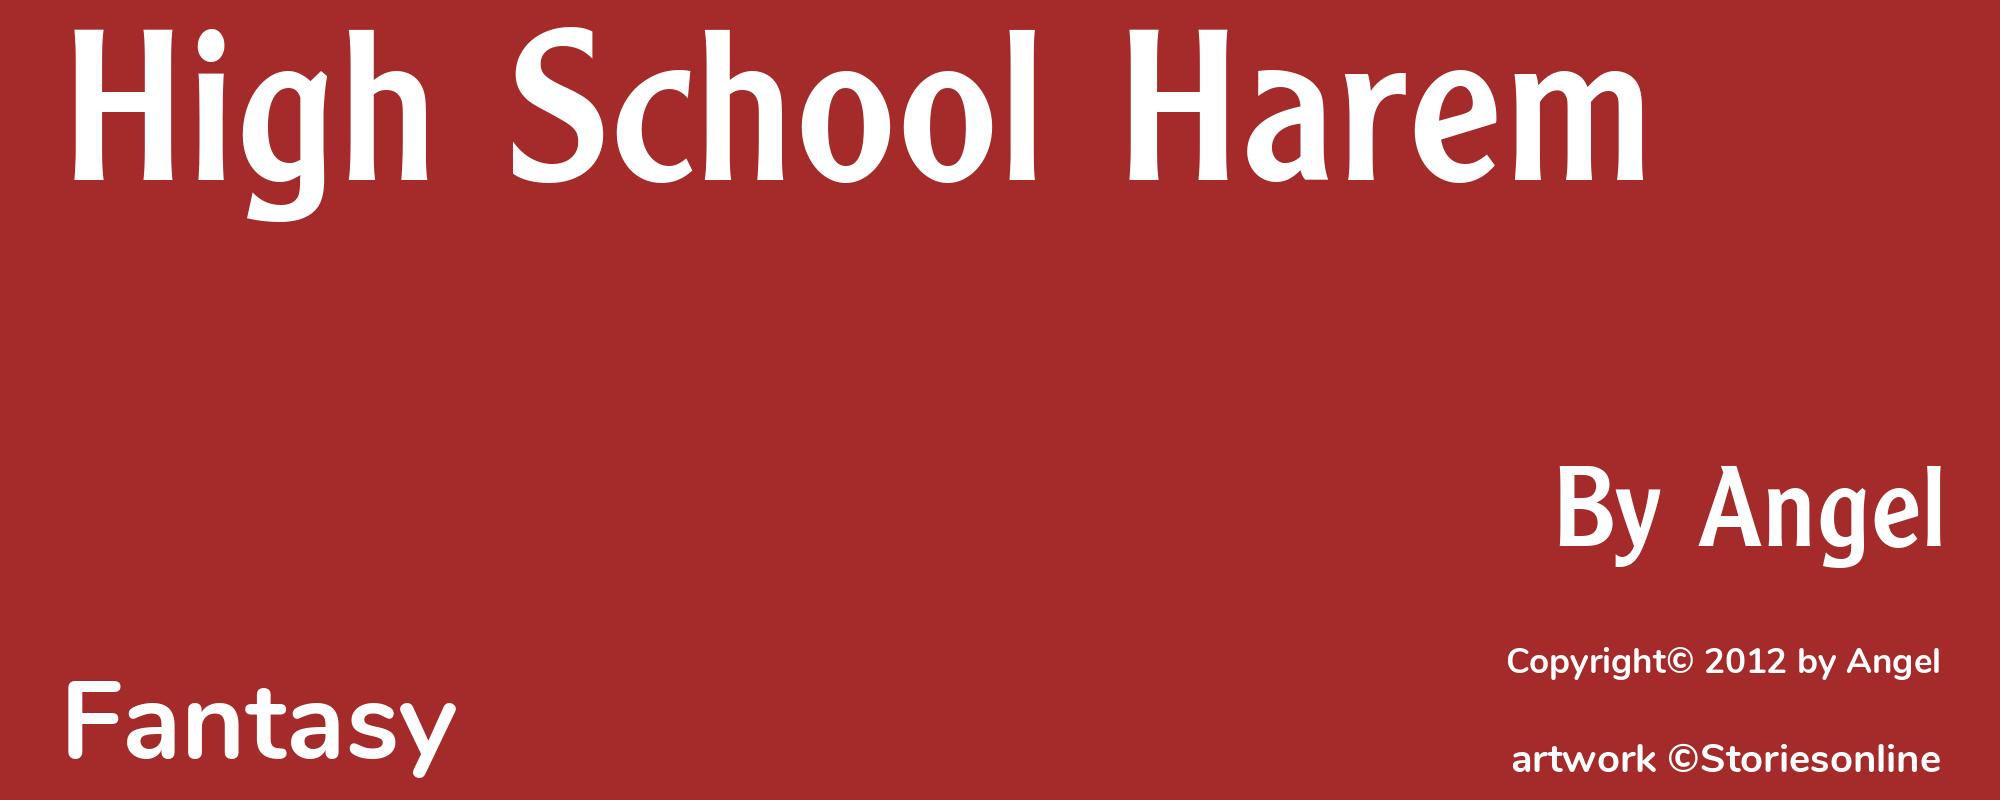 High School Harem - Cover